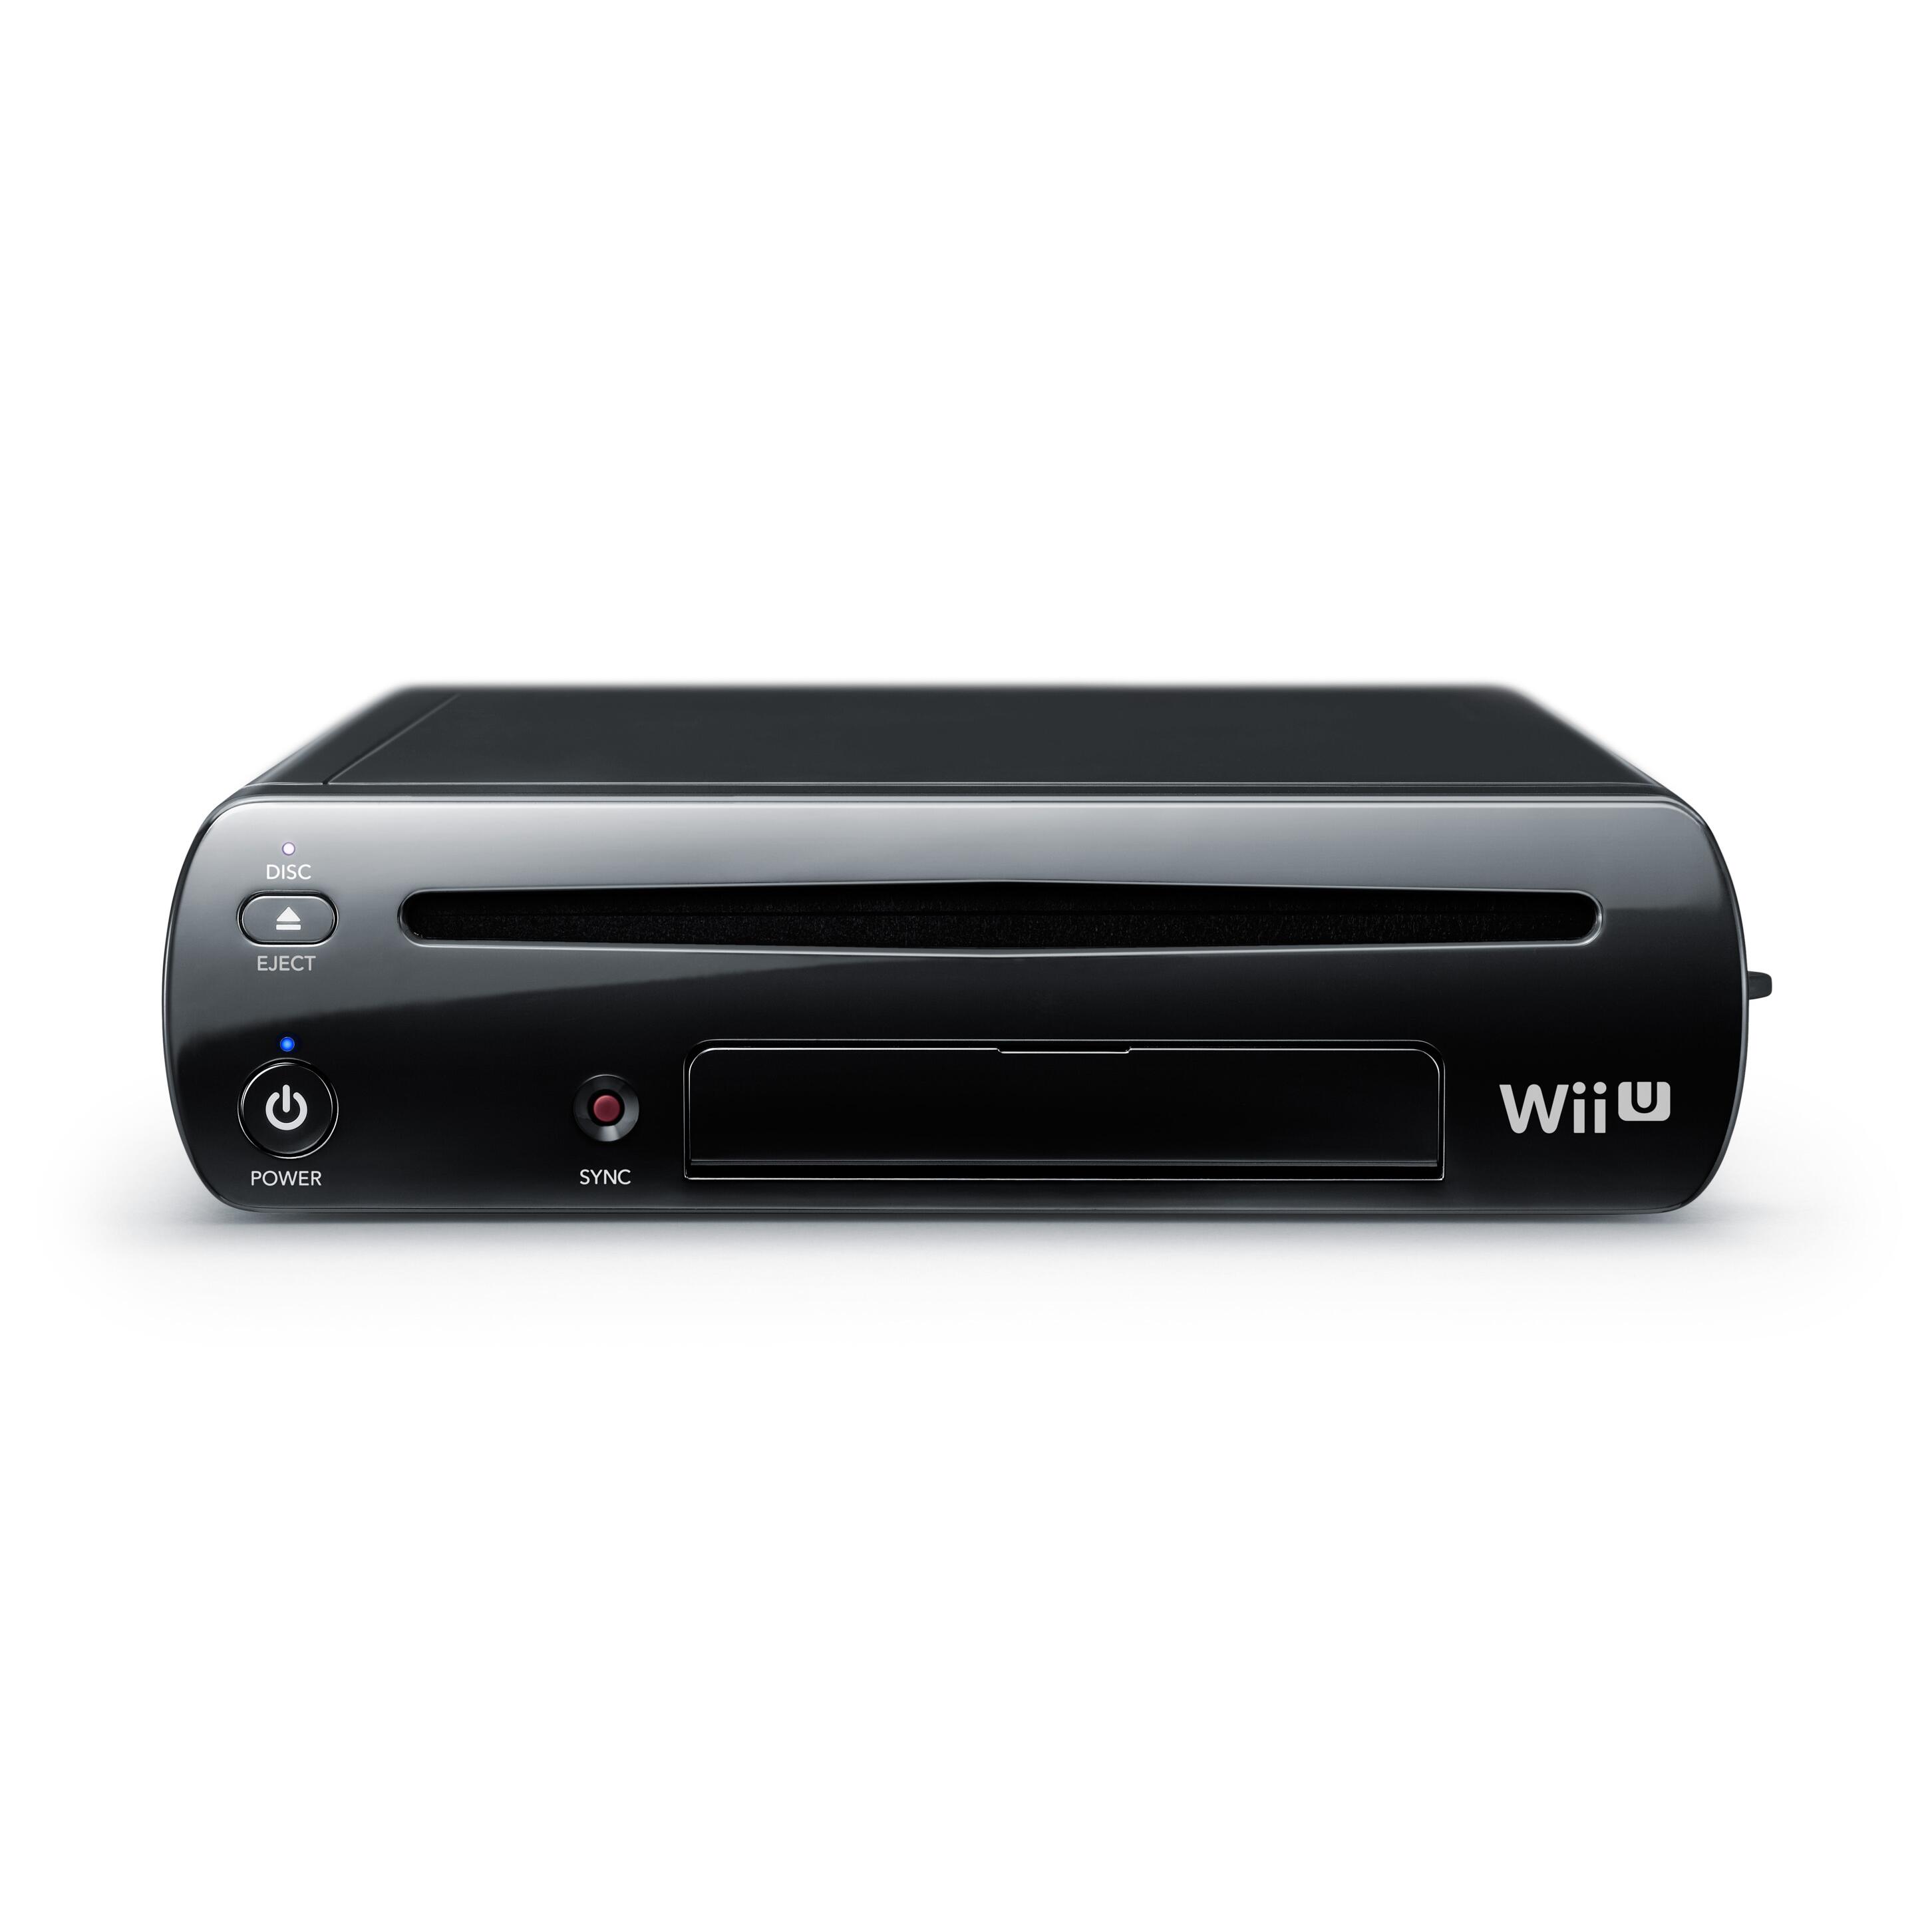 Bestuiven gespannen Wanorde Wii U Console (32GB) - Zwart (Wii) kopen - €71